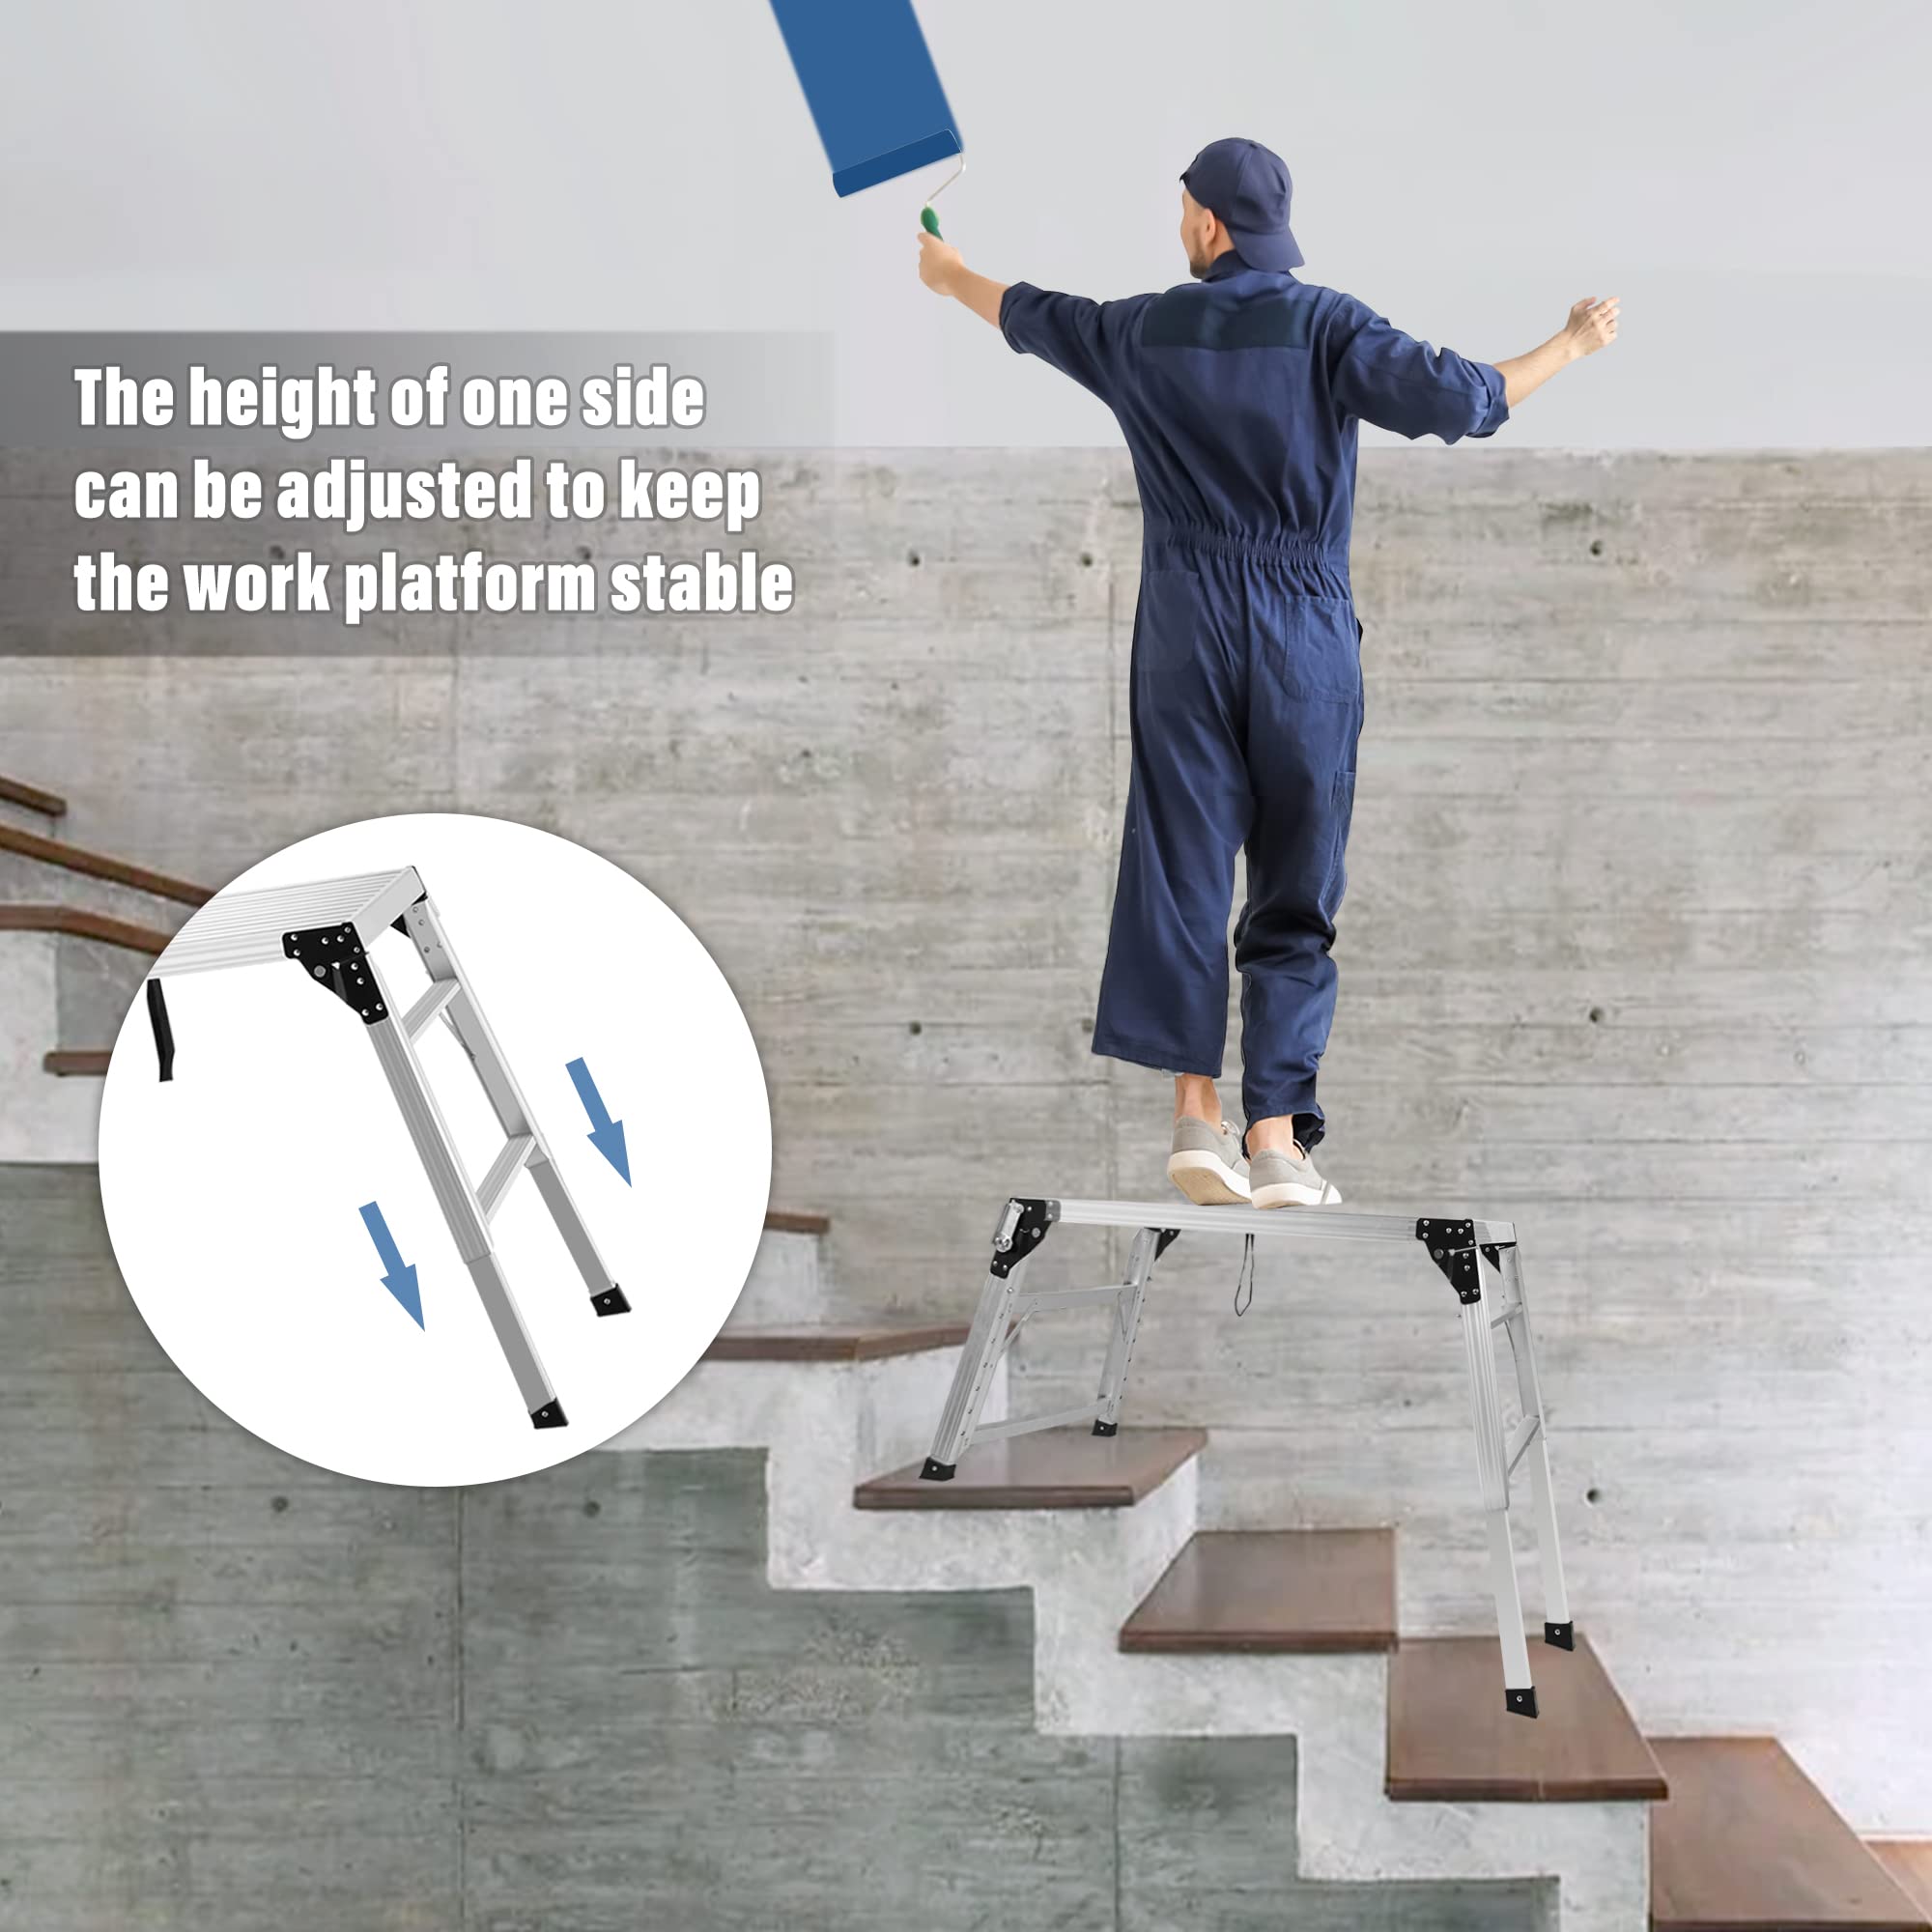 ORIENTOOLS Adjustable Work Platform Step Ladder,Portable Folding Aluminum Step Ladder,Scaffolding Platform of Capacity 330 LBS Heavy Duty,Adjustable Height 25 to 35 inches